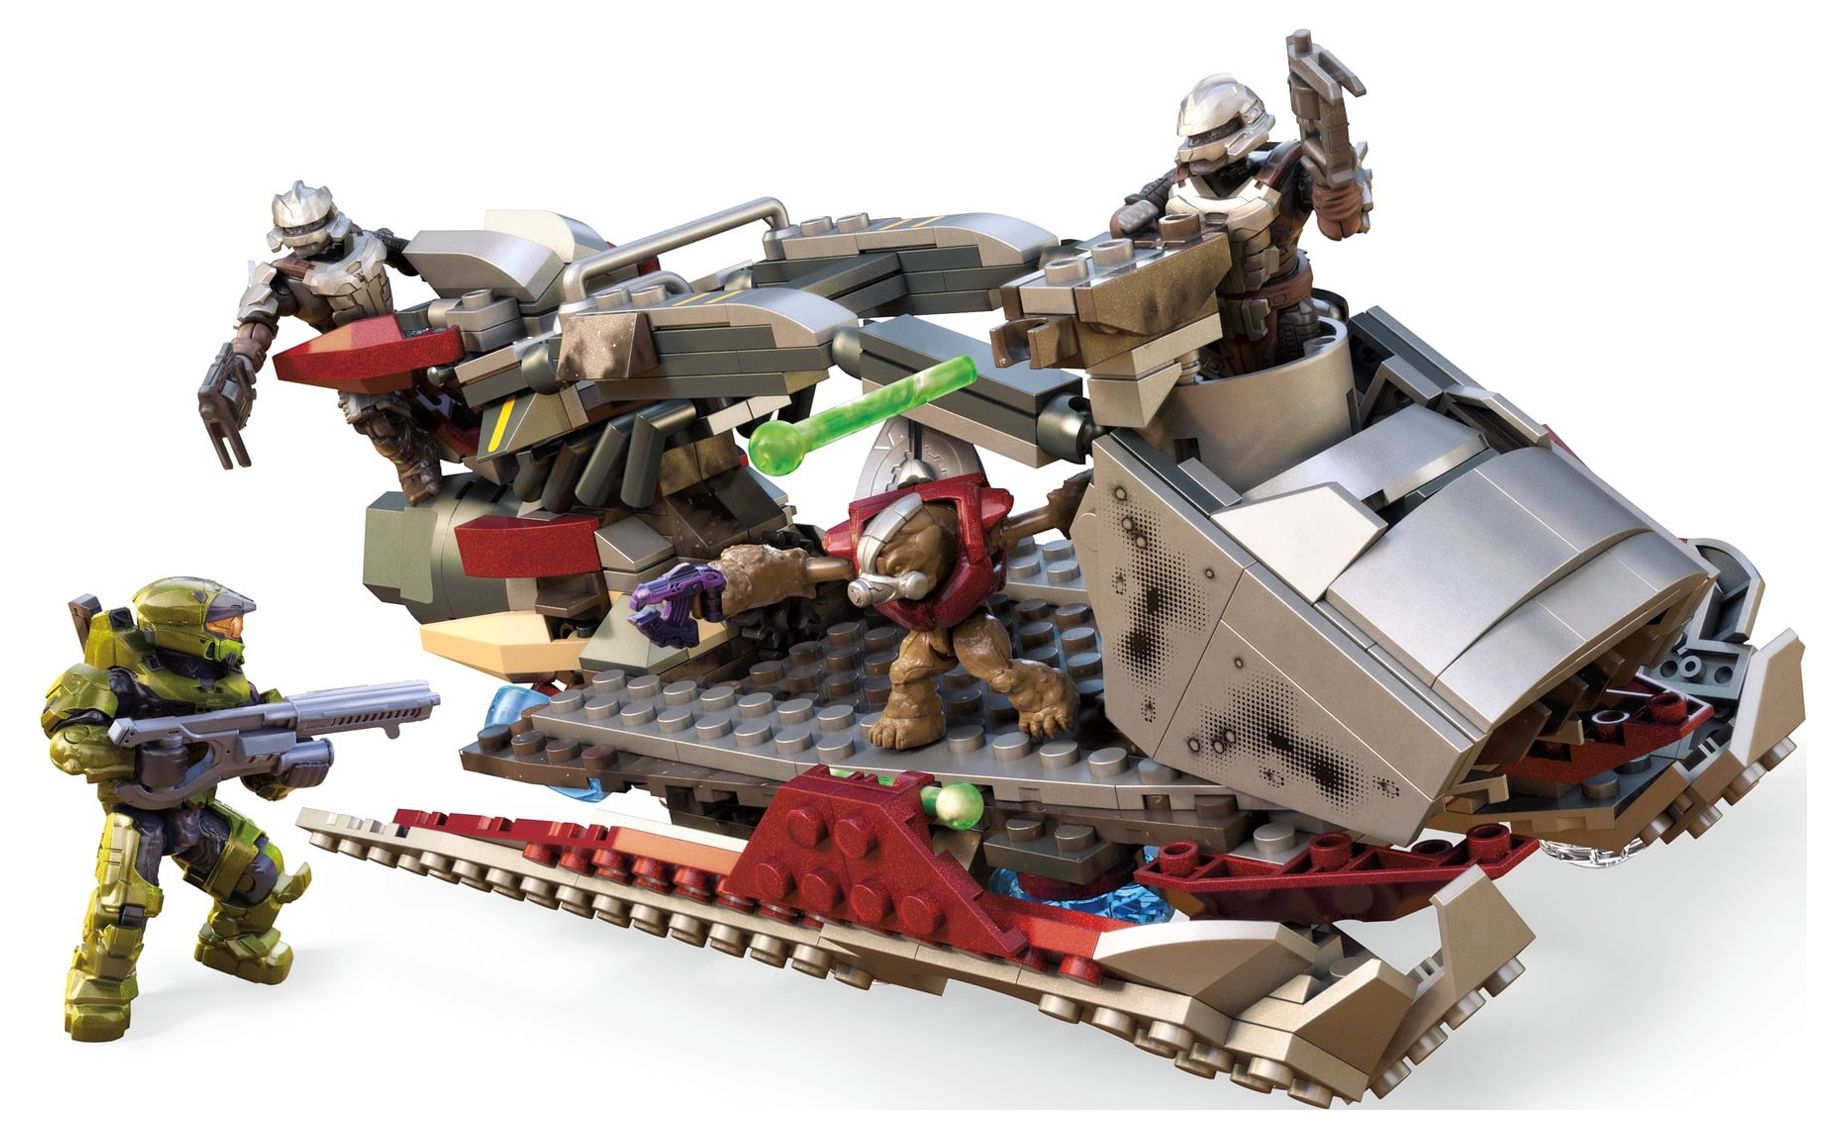 MEGA Halo Skift Intercept Building Kit with Spartan MK VII Action Figure (452 Pieces) - image 4 of 7